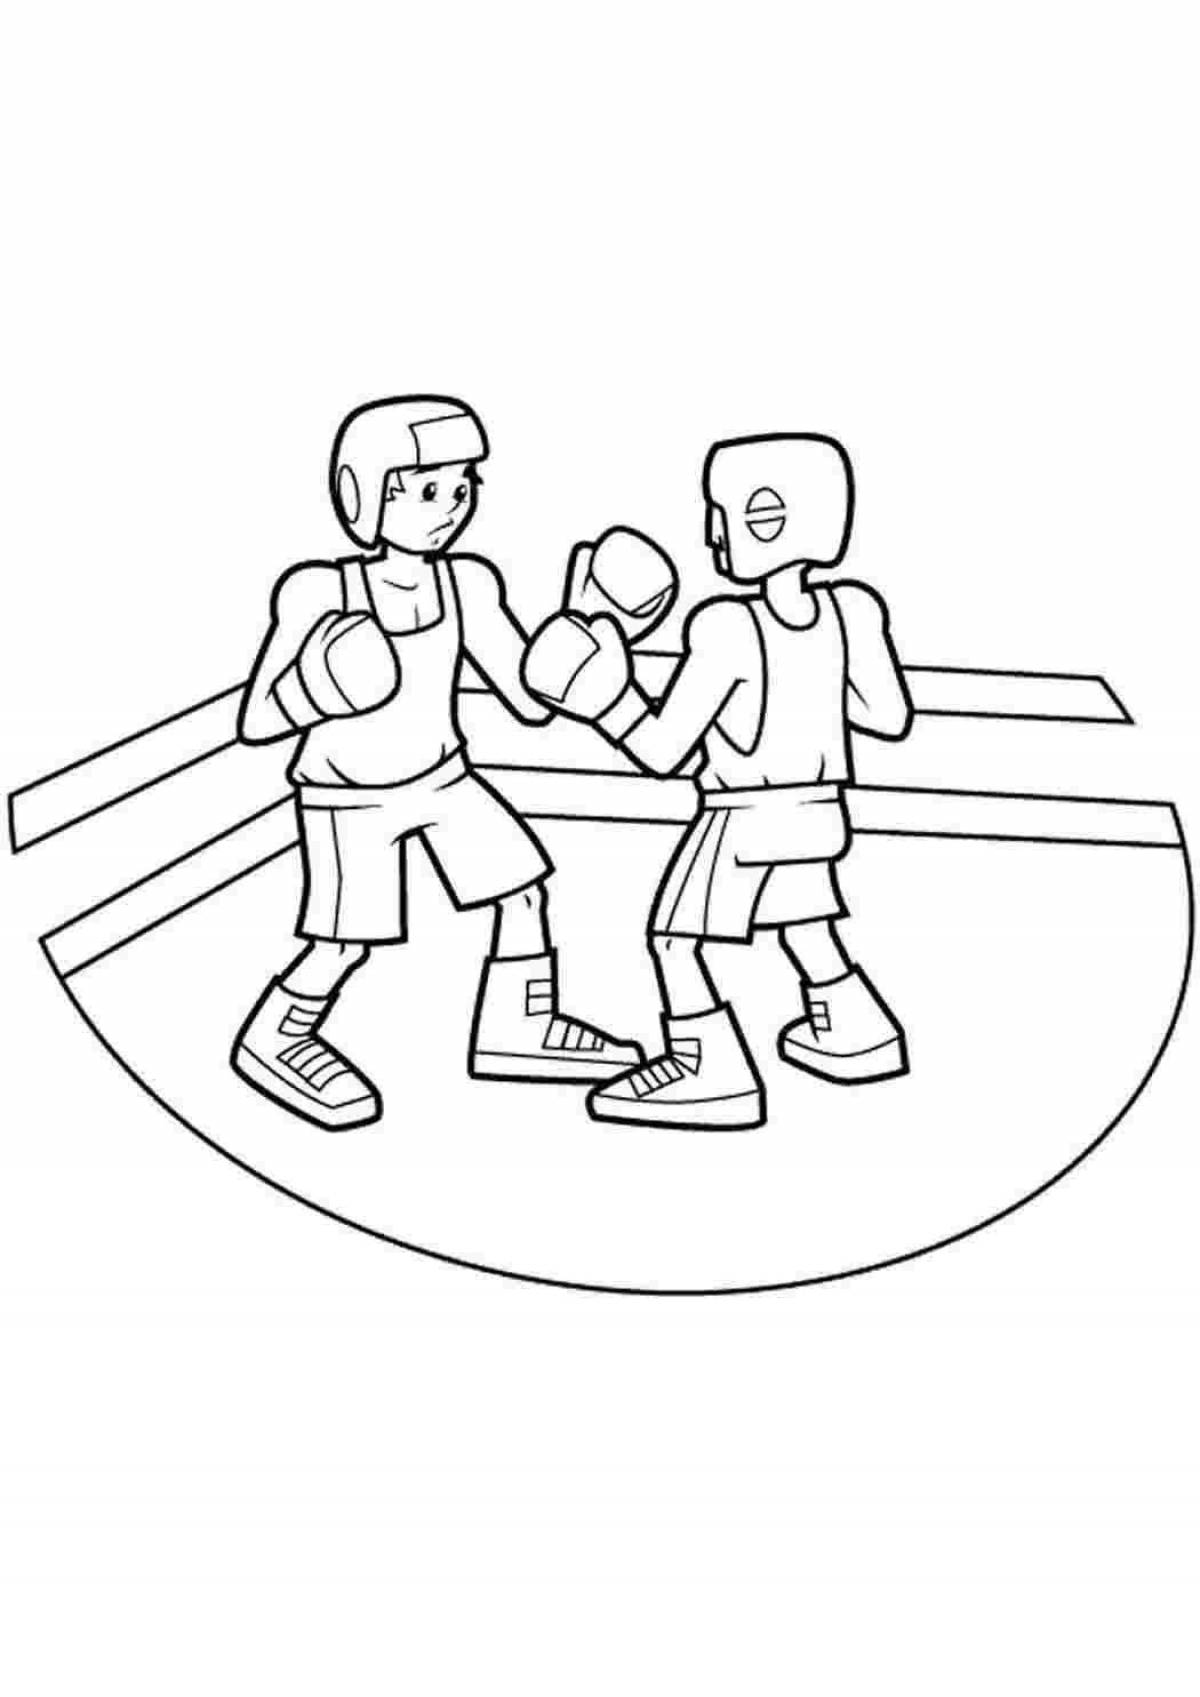 Daring kickboxing coloring page